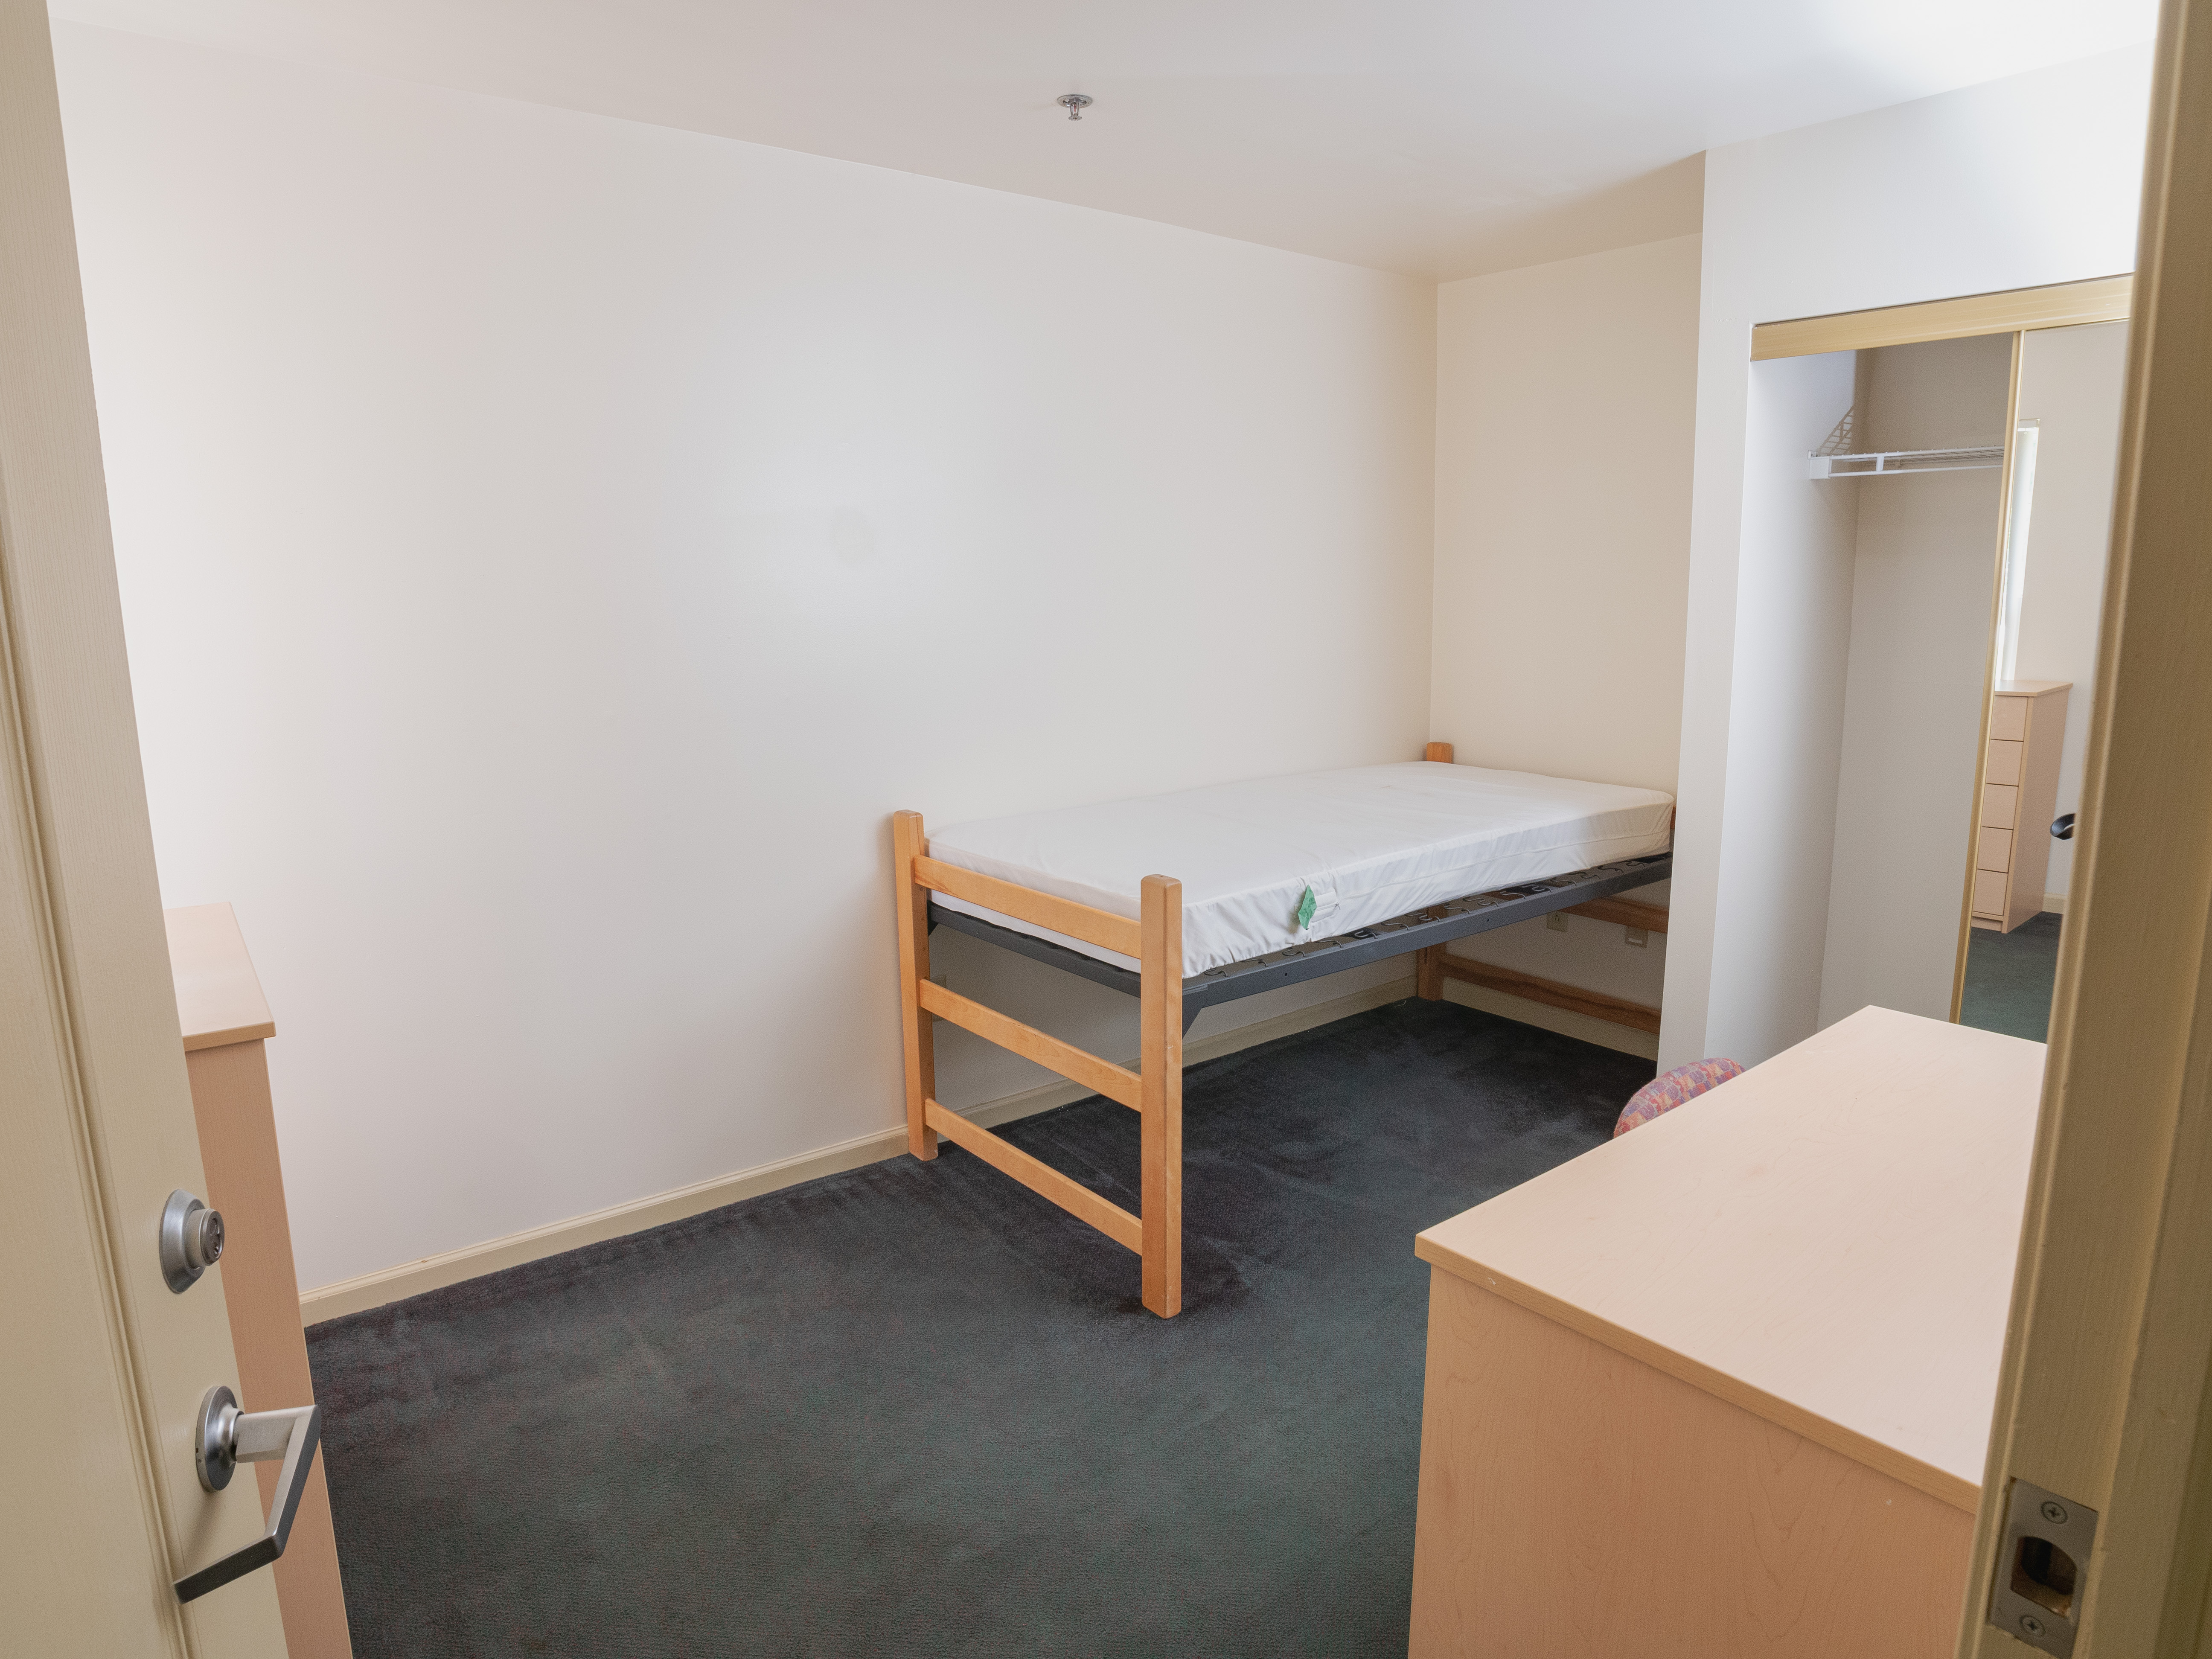 Picture of Campus Apartment bedroom.